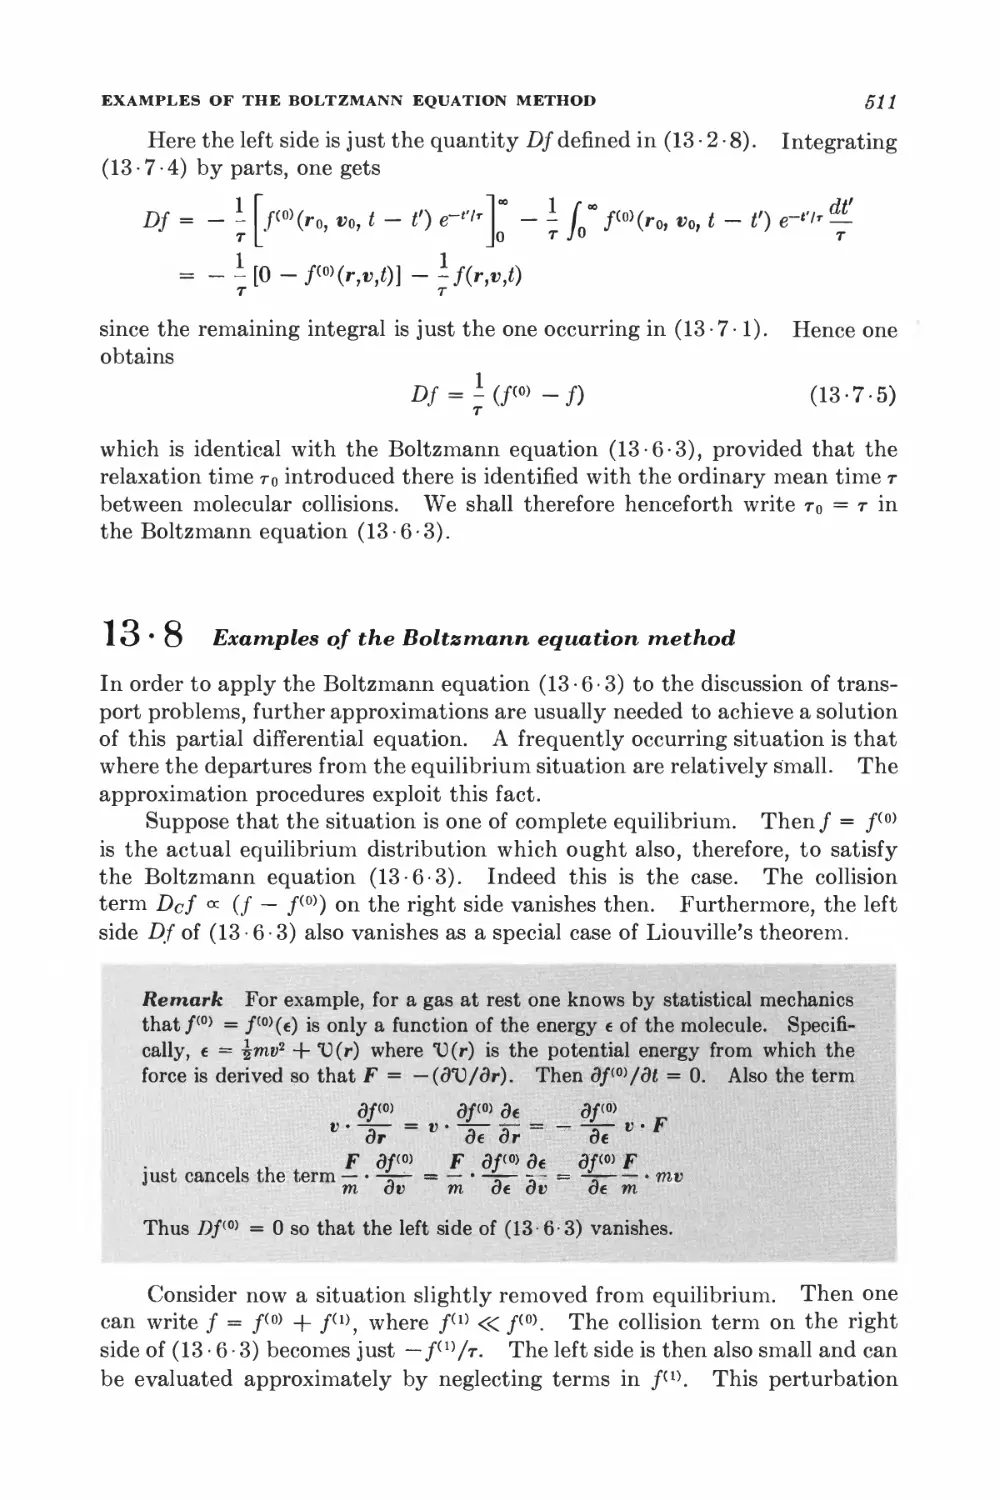 13.8 Examples of the Boltzmann equation method